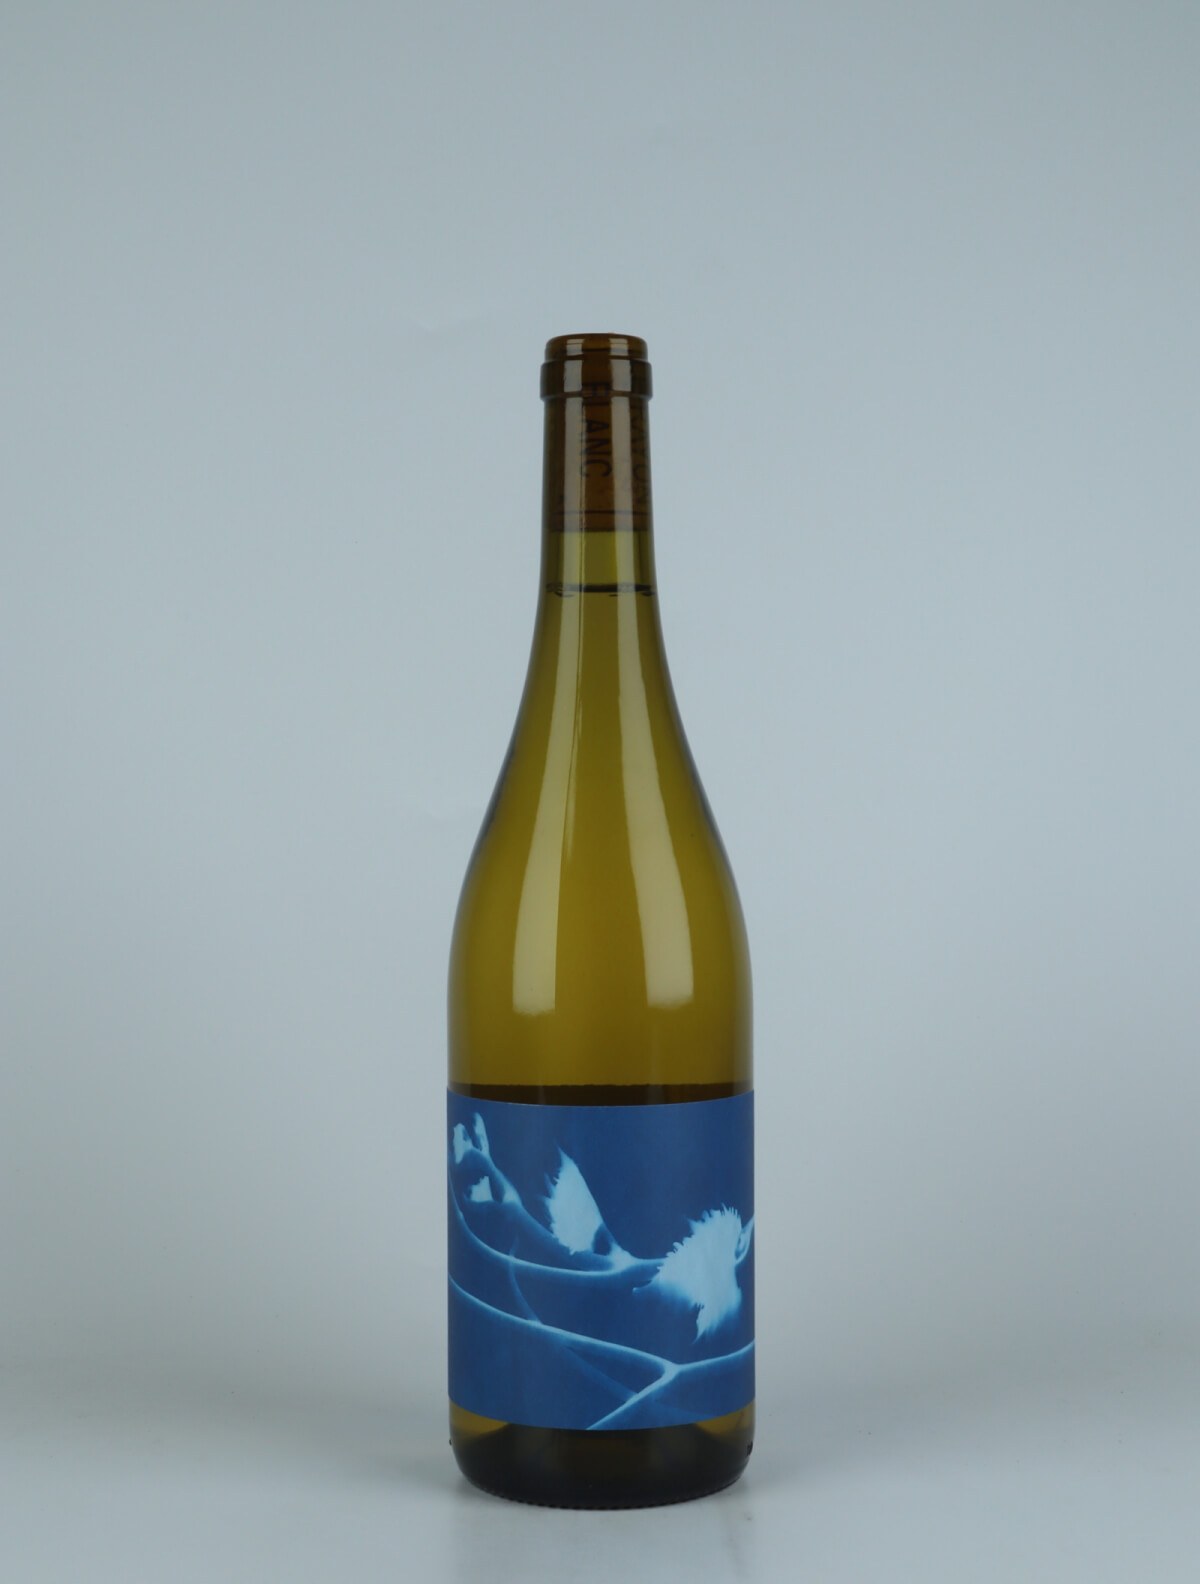 En flaske 2021 Le Rayon Blanc Hvidvin fra Thomas Puéchavy, Loire i Frankrig